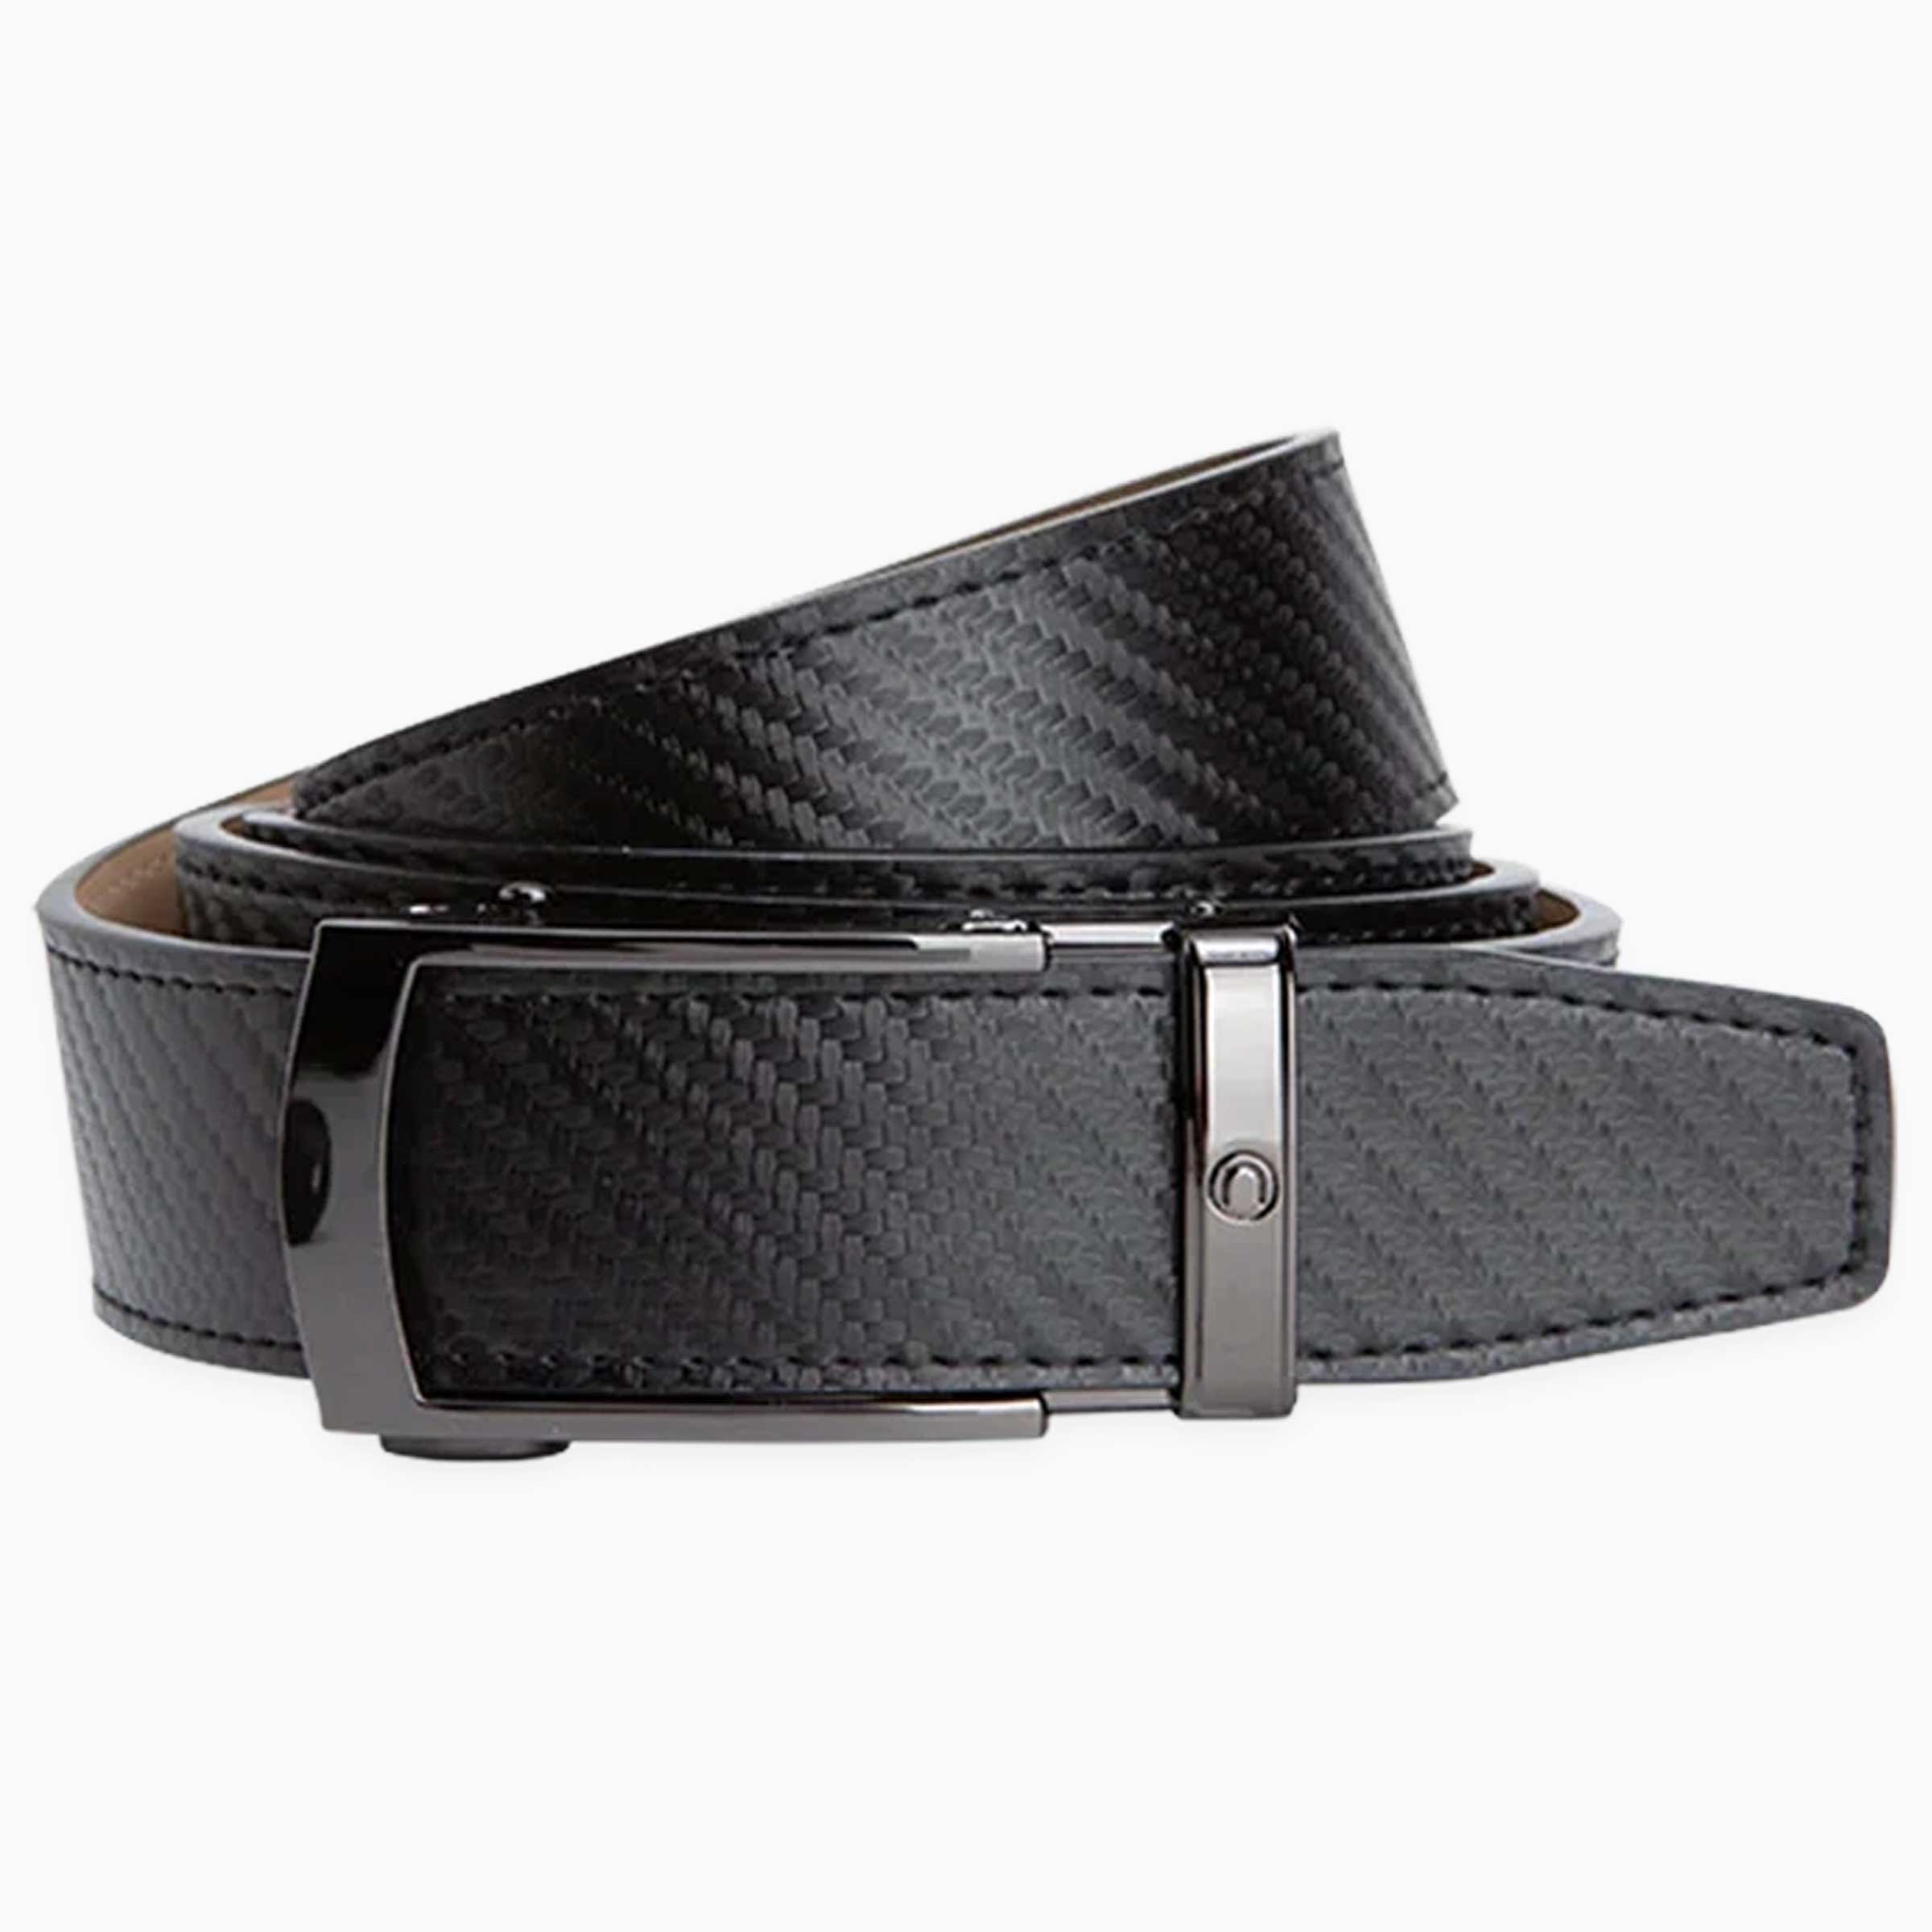 Vetica Carbon Black, 1 3/8" Strap, Dress Belt